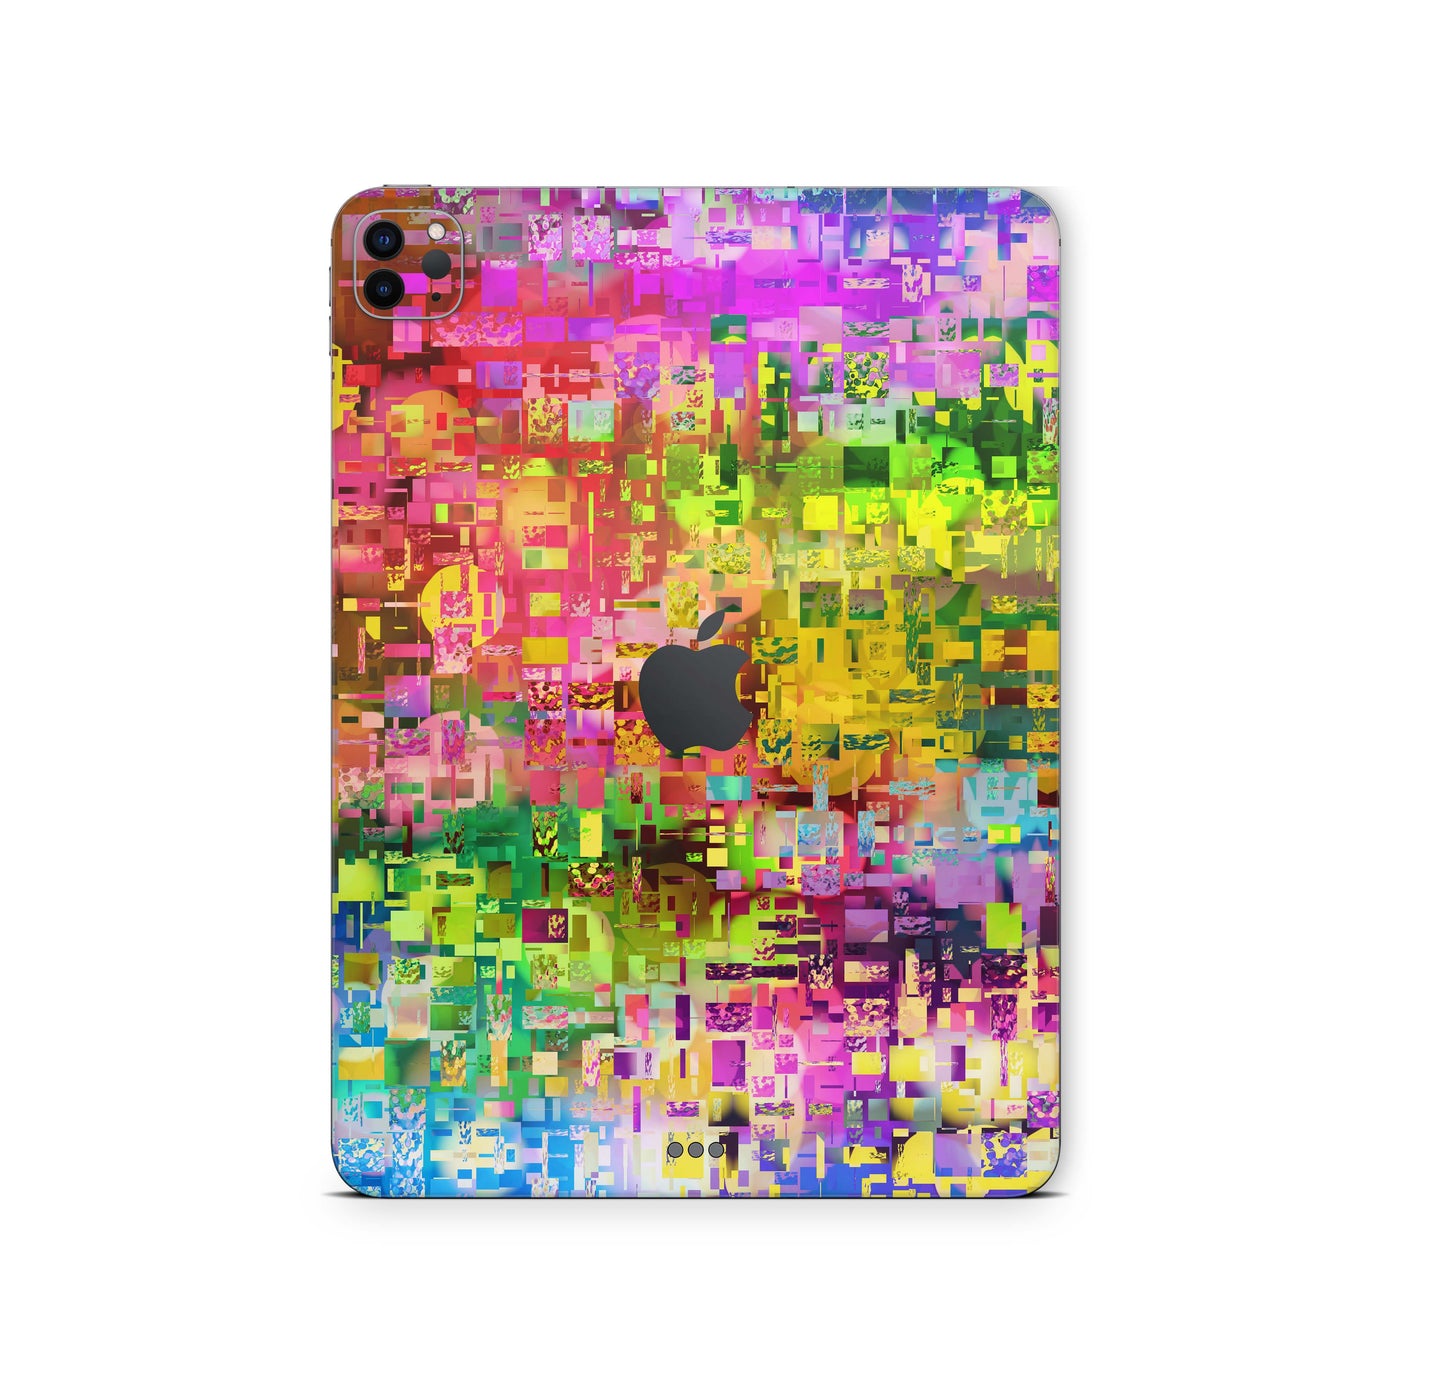 iPad Pro Skin 11" 2.Generation A2228 Design Cover Folie Vinyl Skins & Wraps Aufkleber Skins4u Abstract  